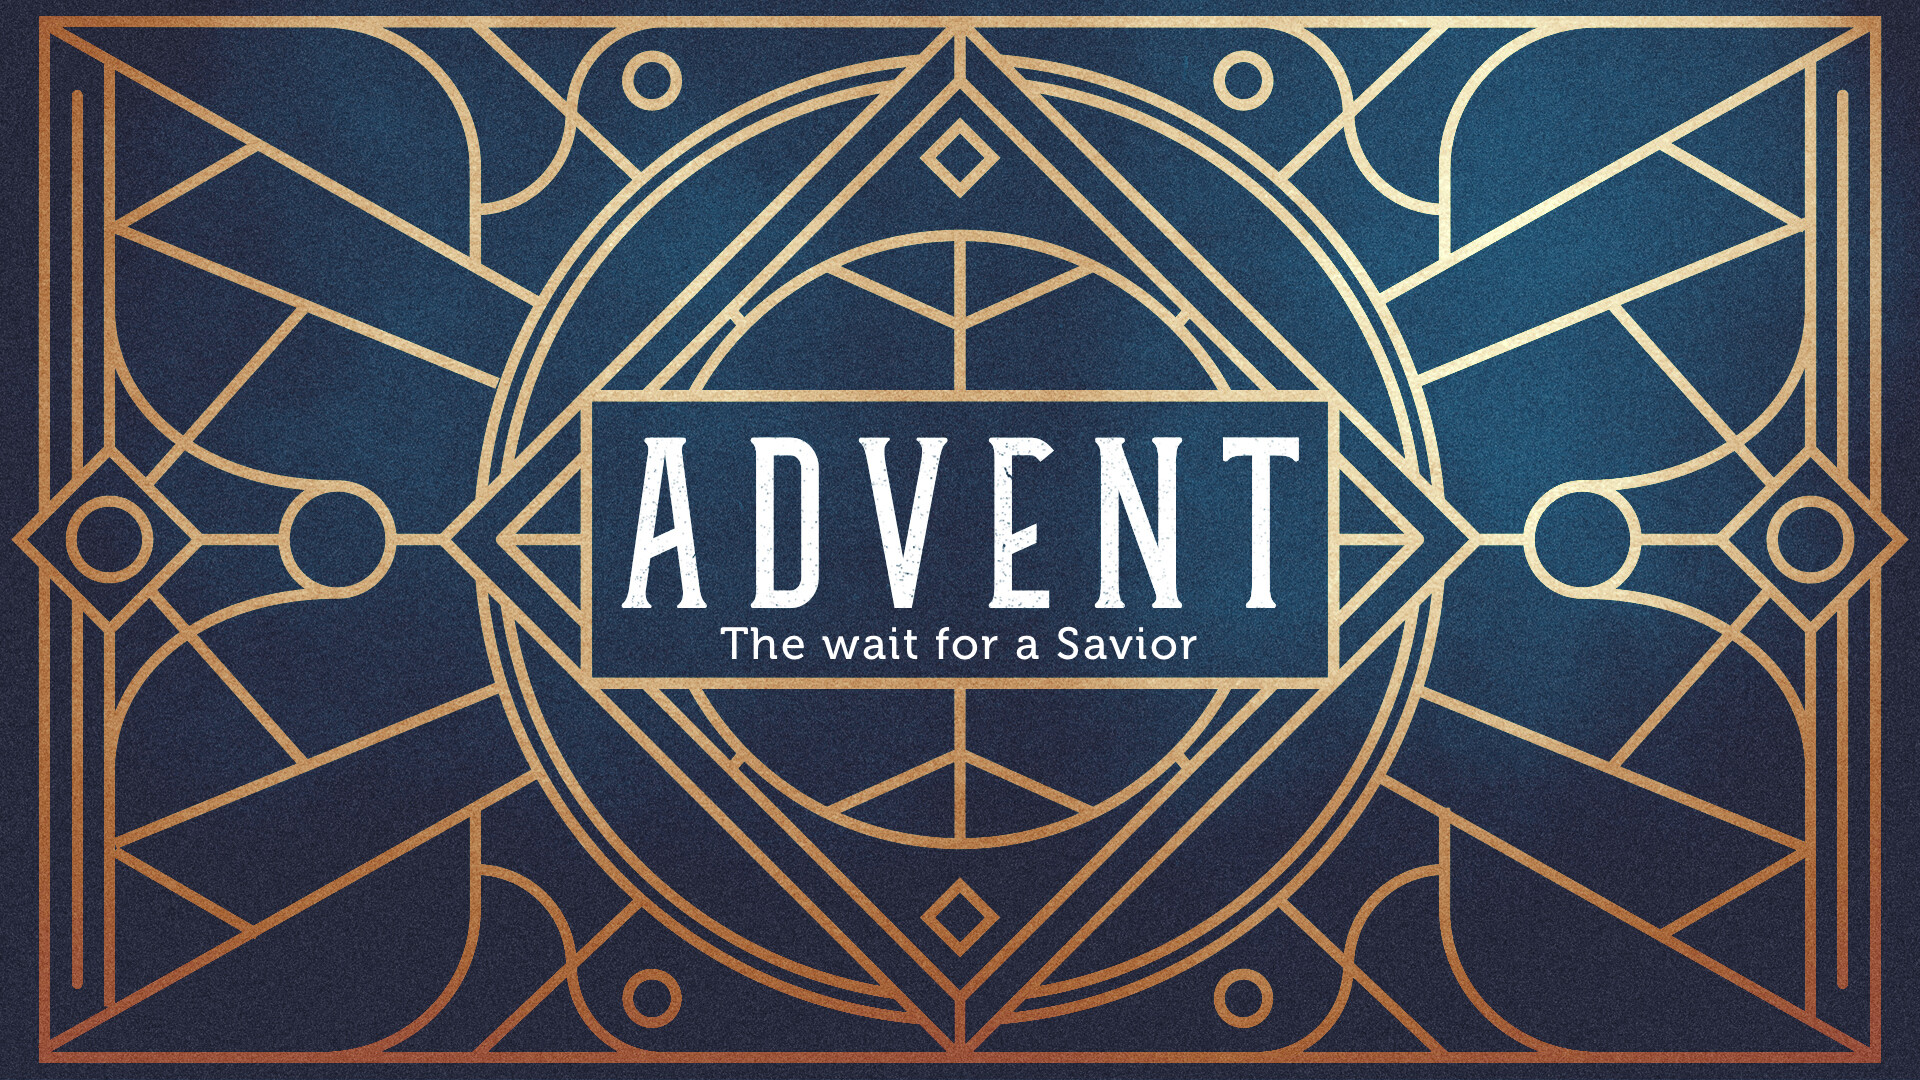 The Wait for a Savior